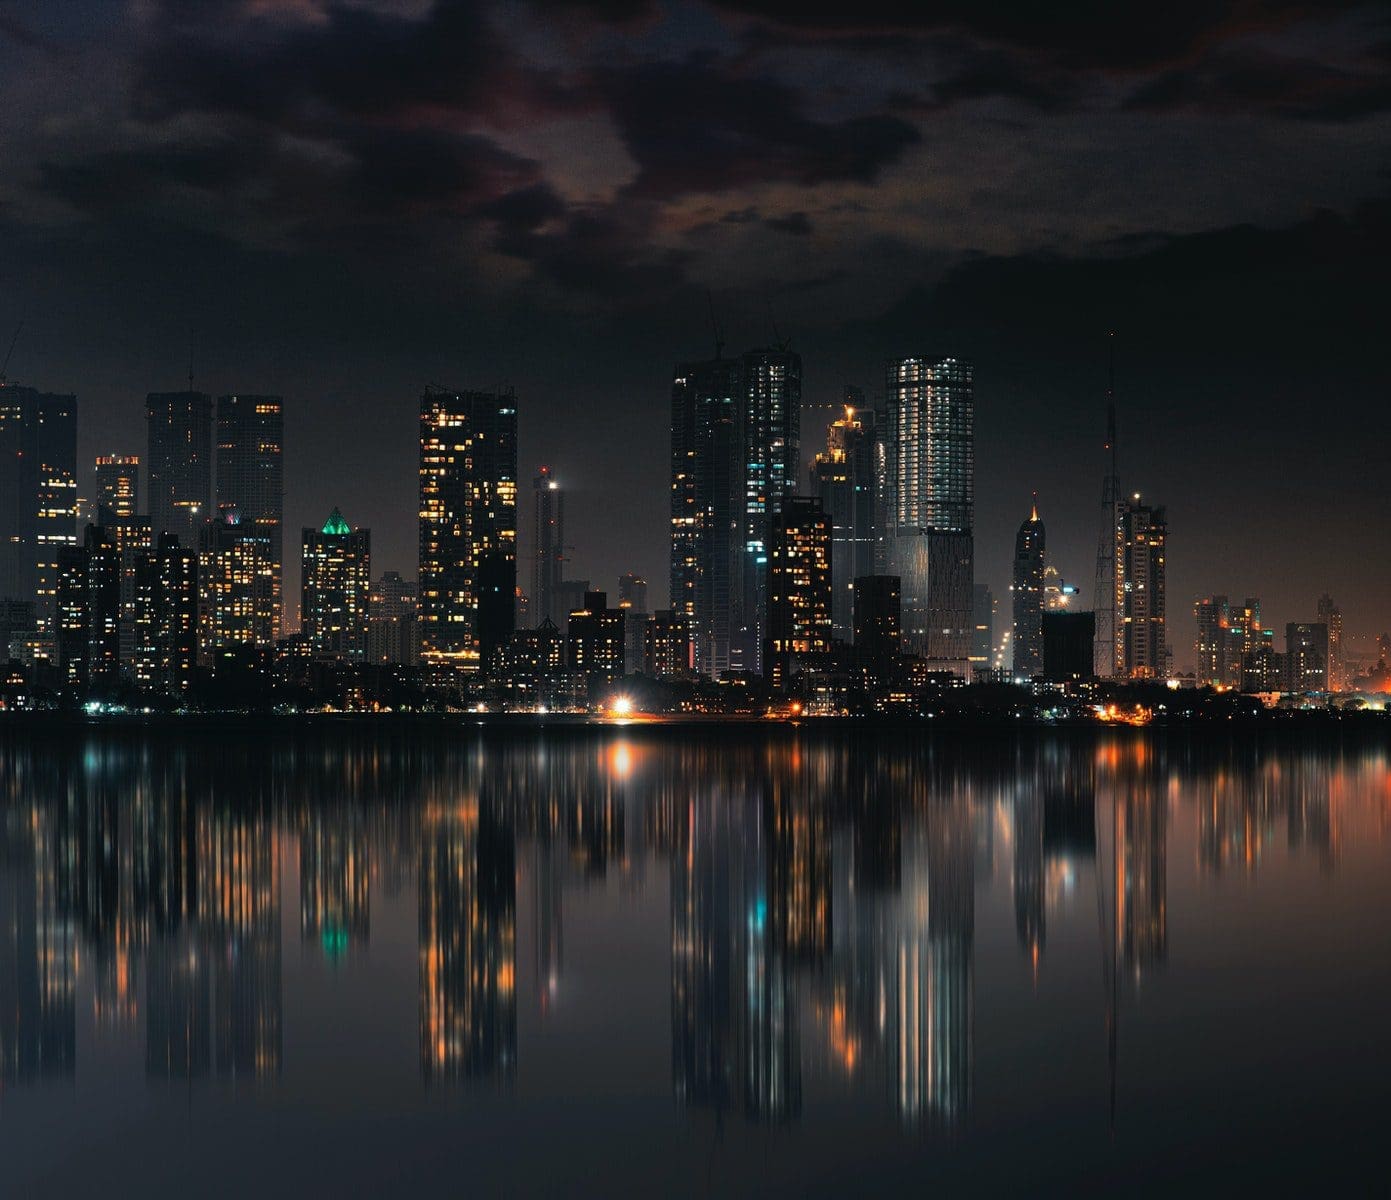 maharashtra companies City Skyline Across Body of Water during Night Time